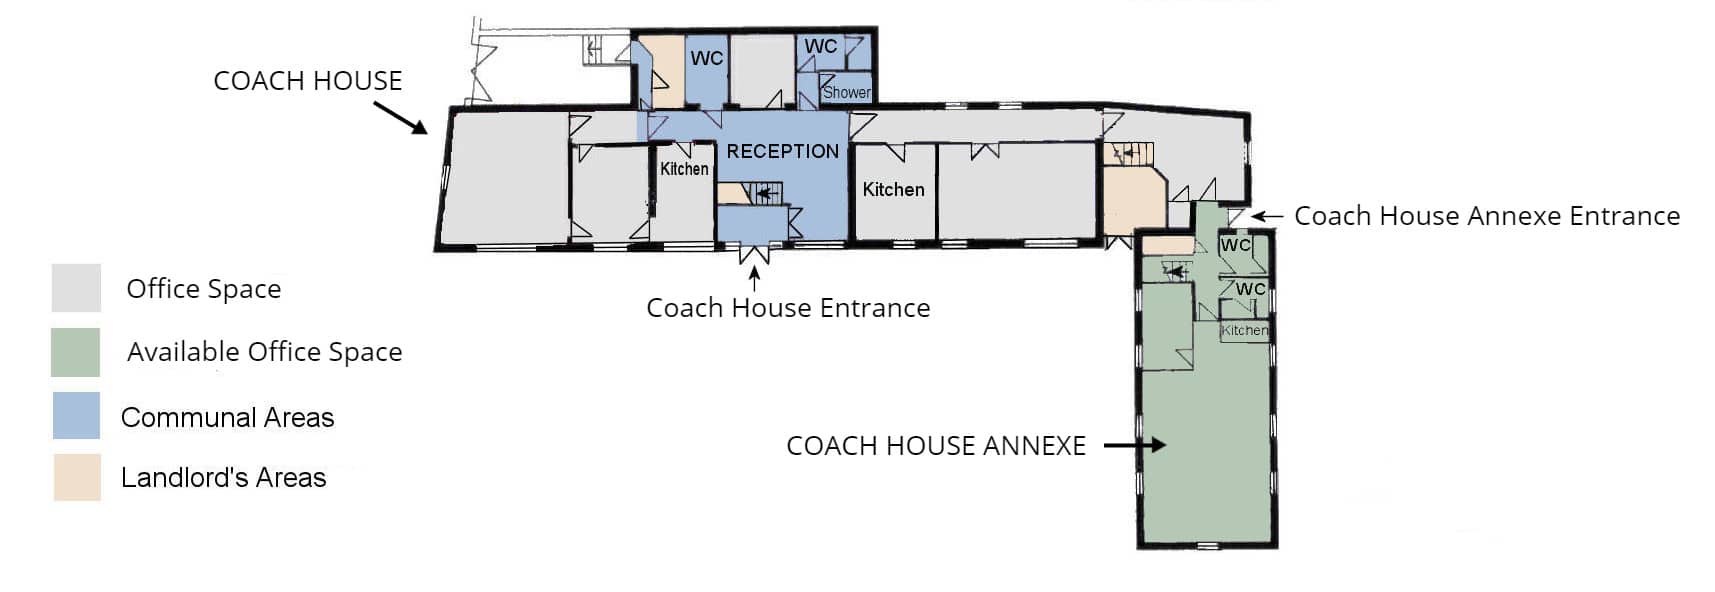 Coach House First Floor Plans